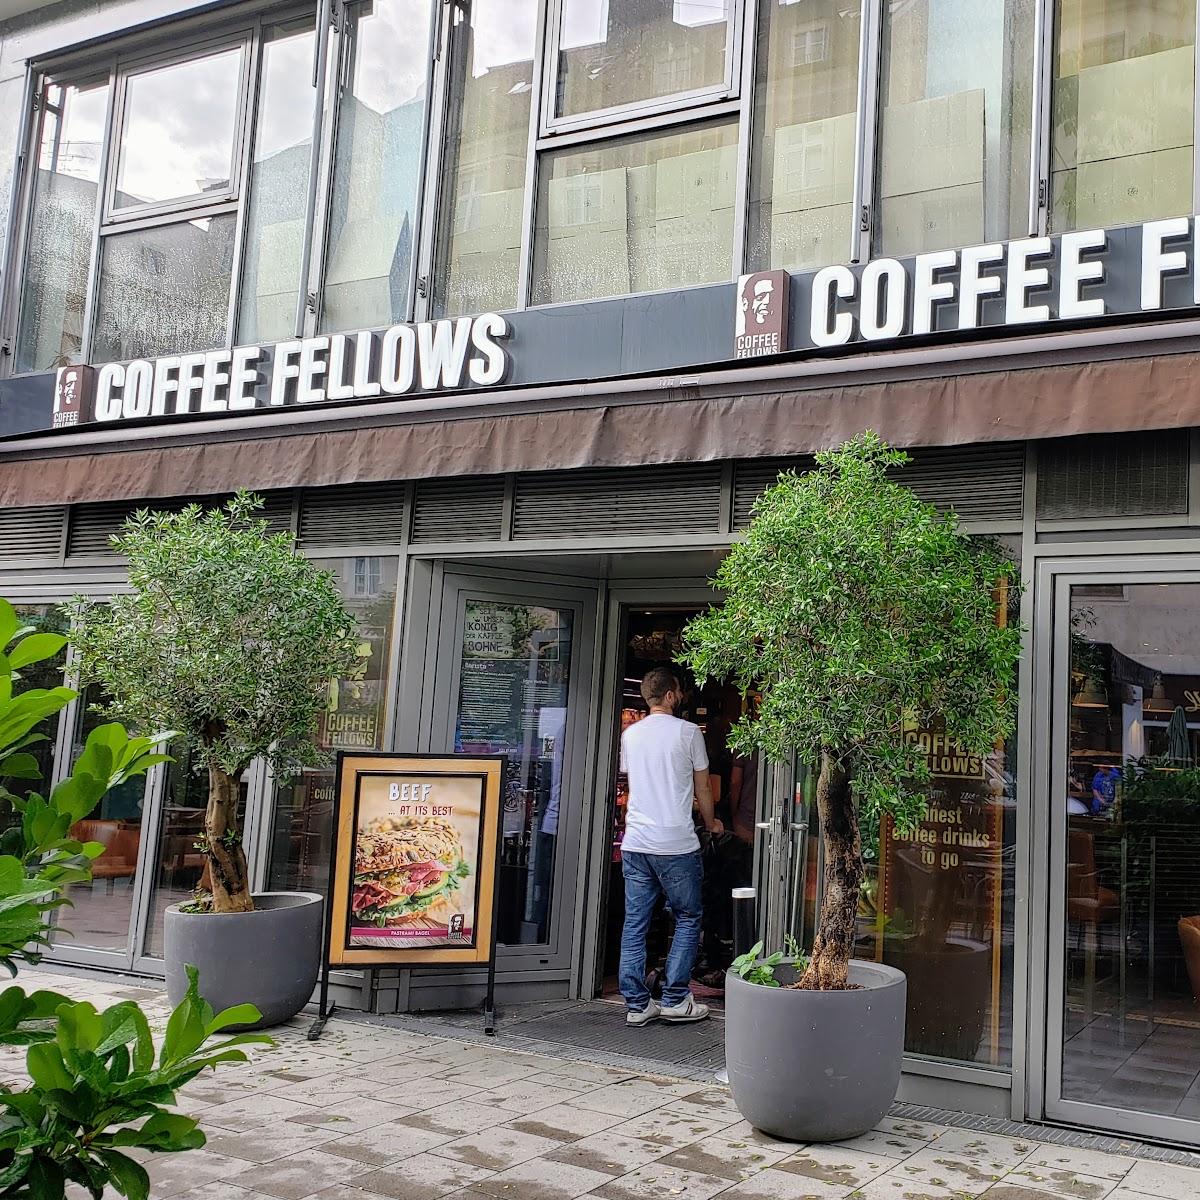 Restaurant "Coffee Fellows - Kaffee, Bagels, Frühstück" in München